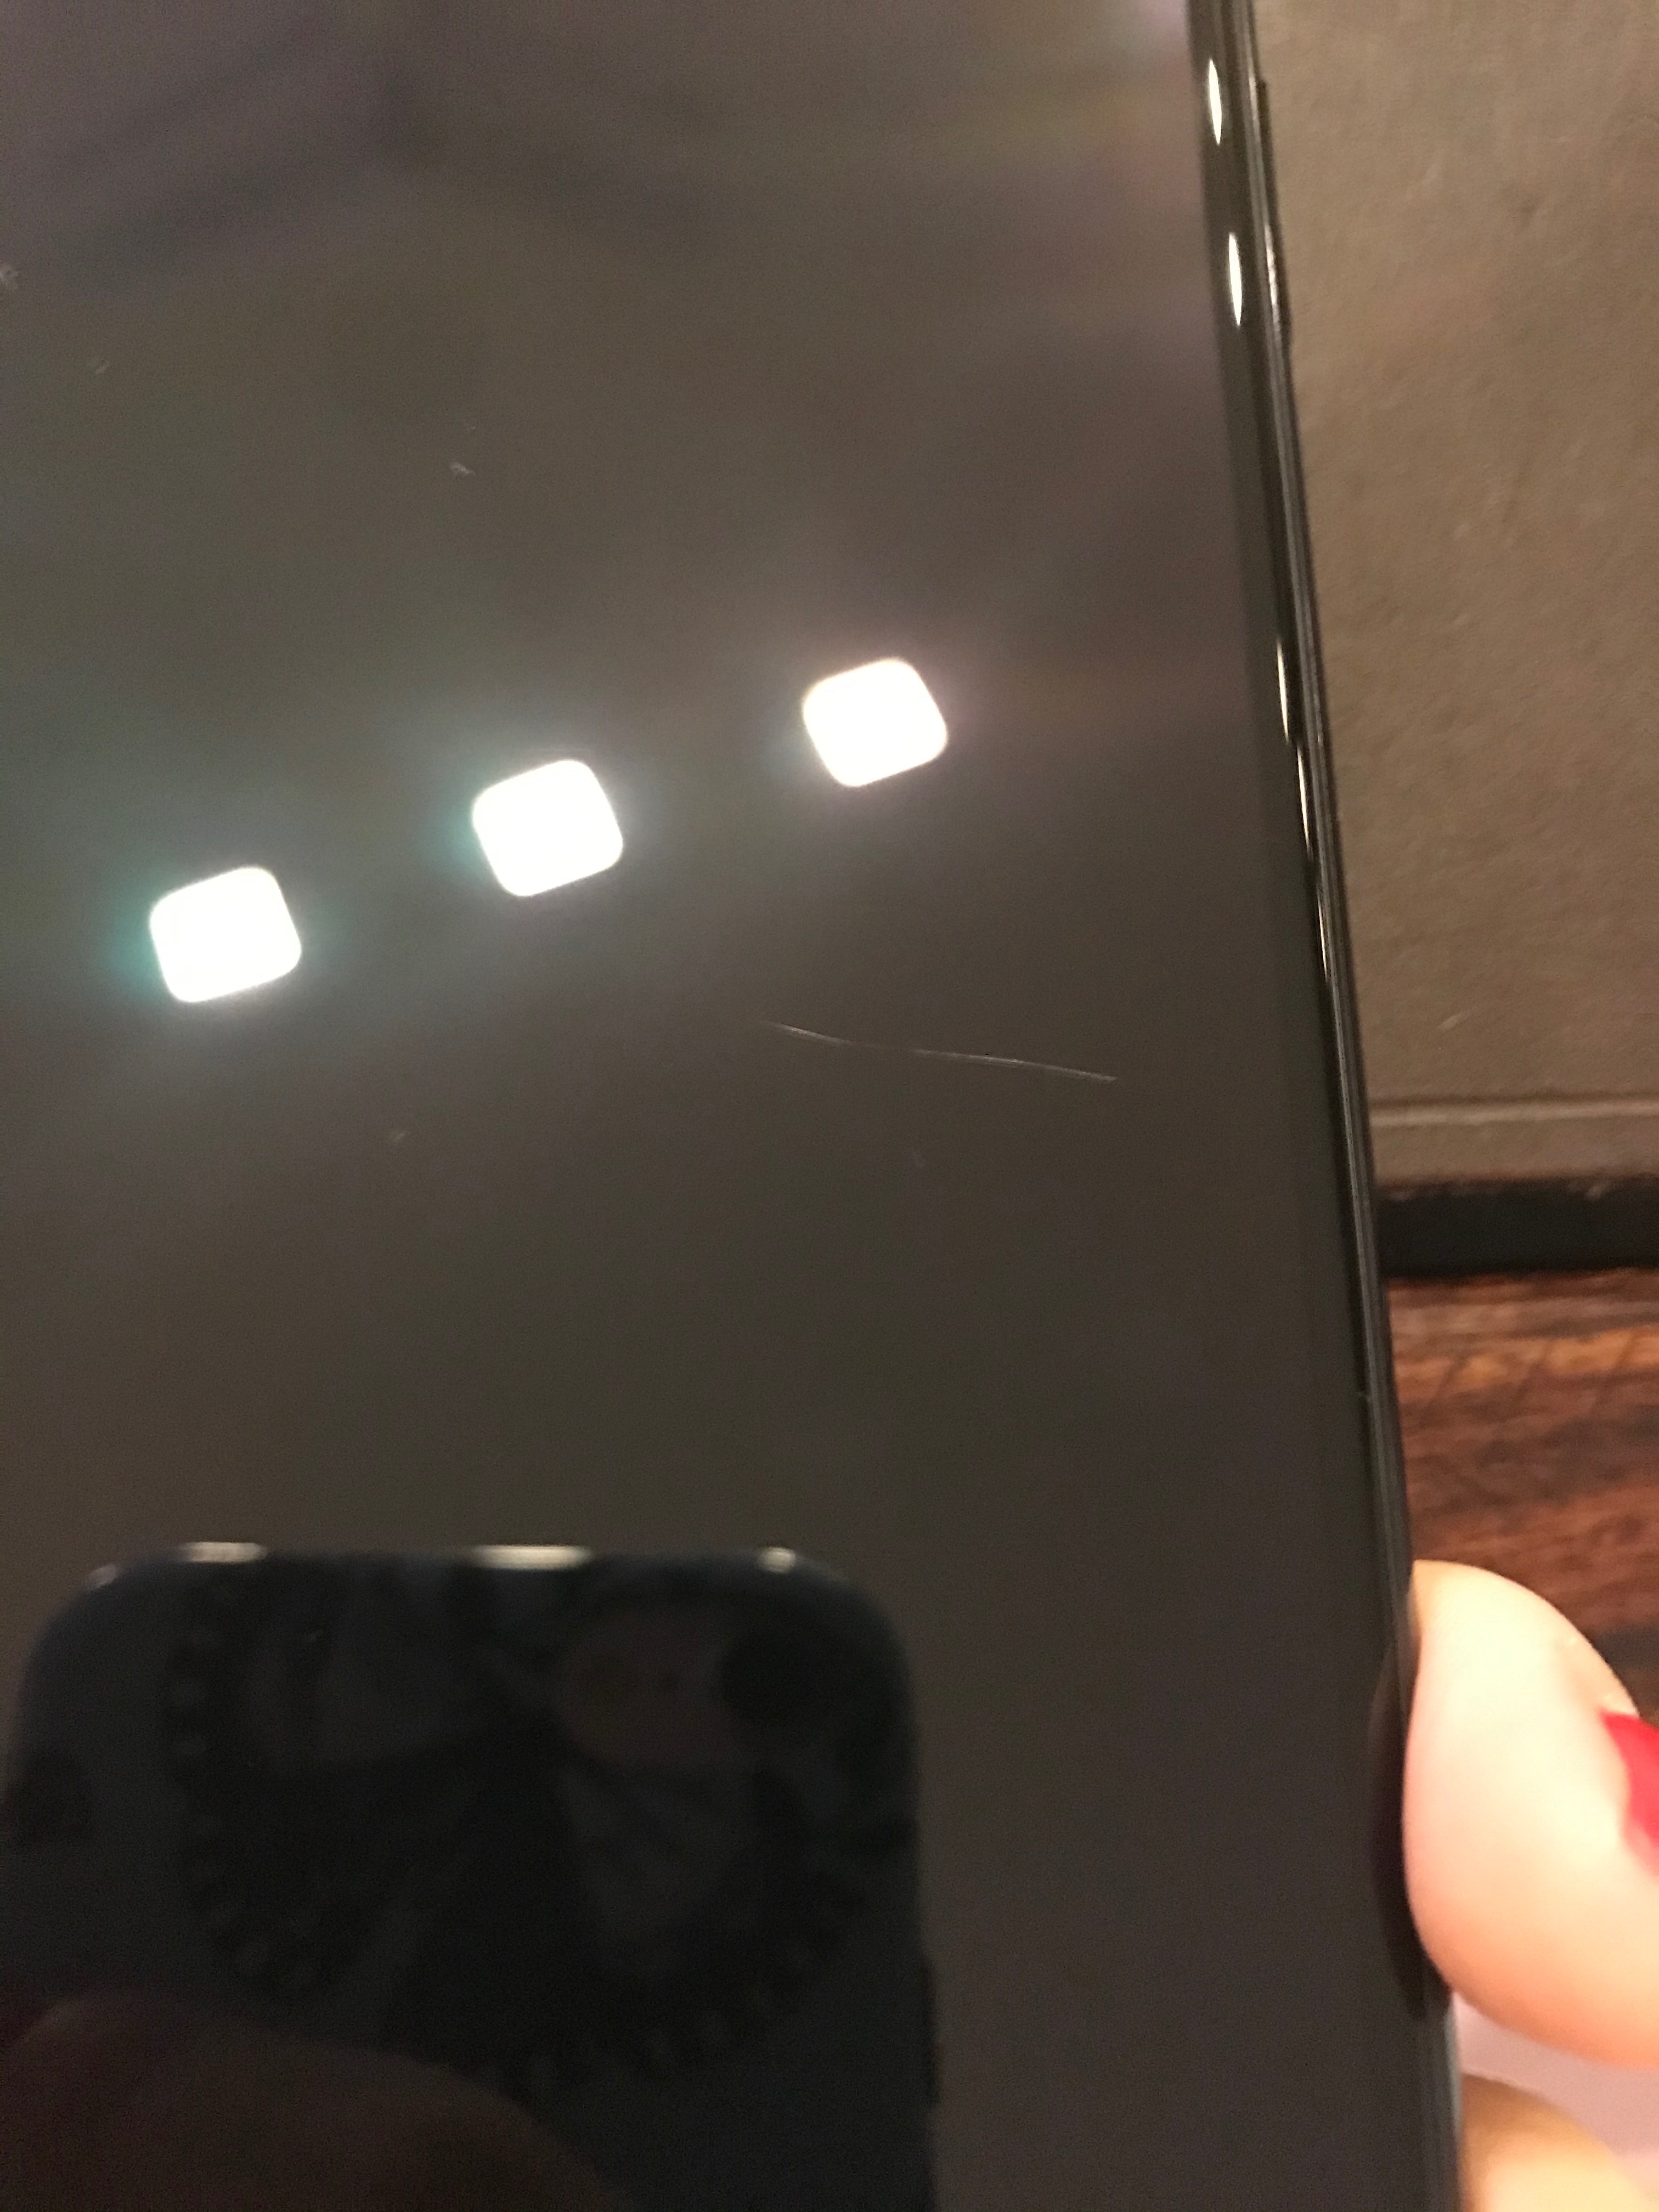 Do Apple screens scratch?